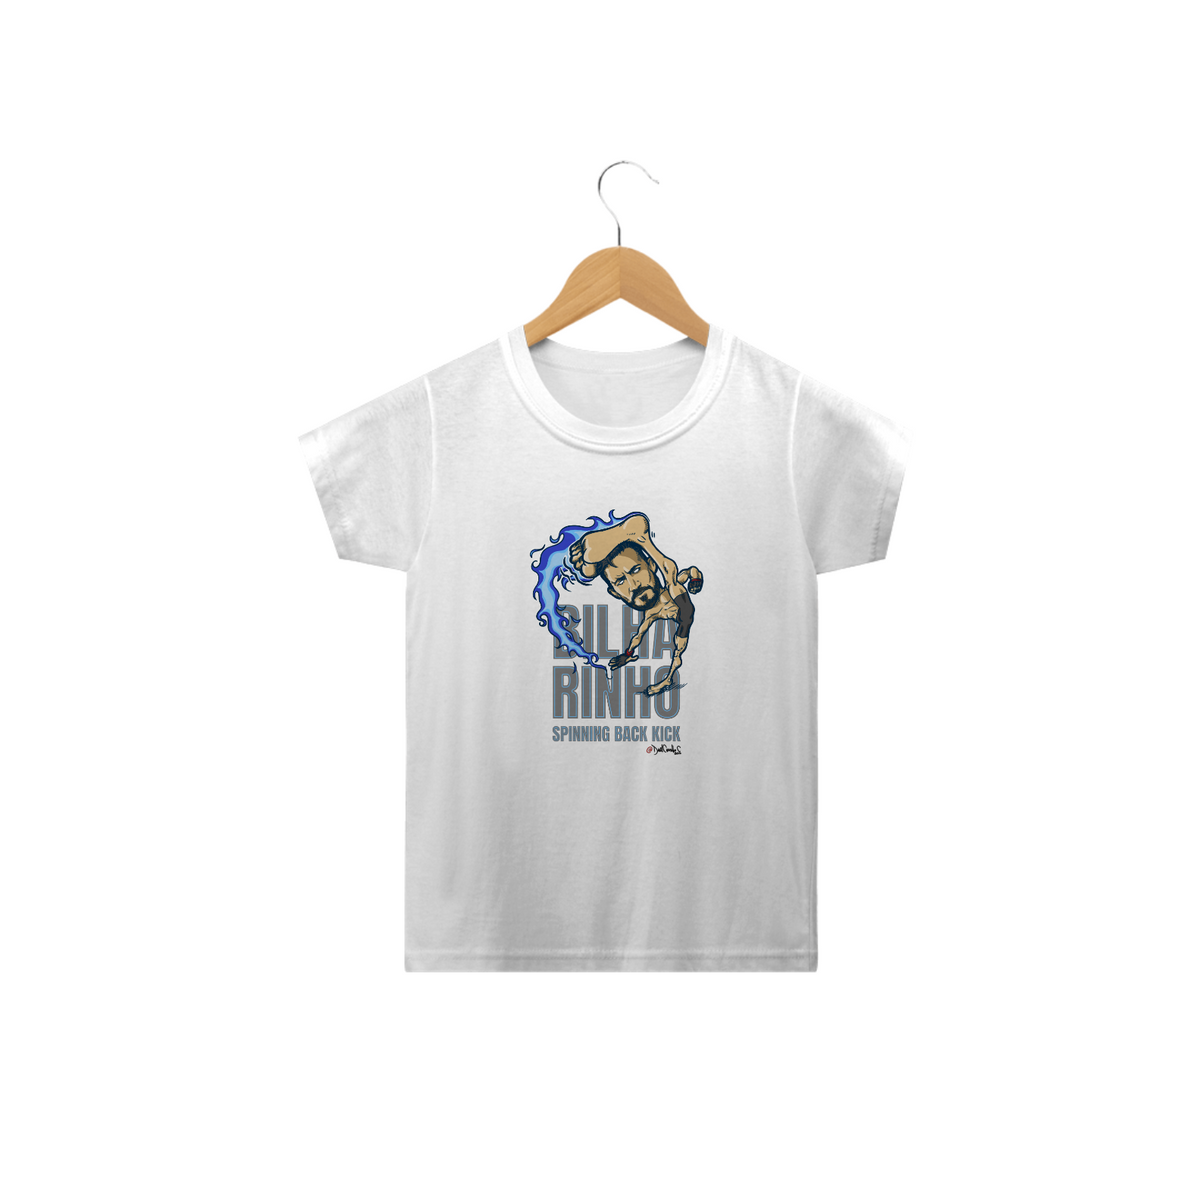 Nome do produto: SPINNING BACK KICK - Camiseta Infantil. - JONAS BILHARINHO